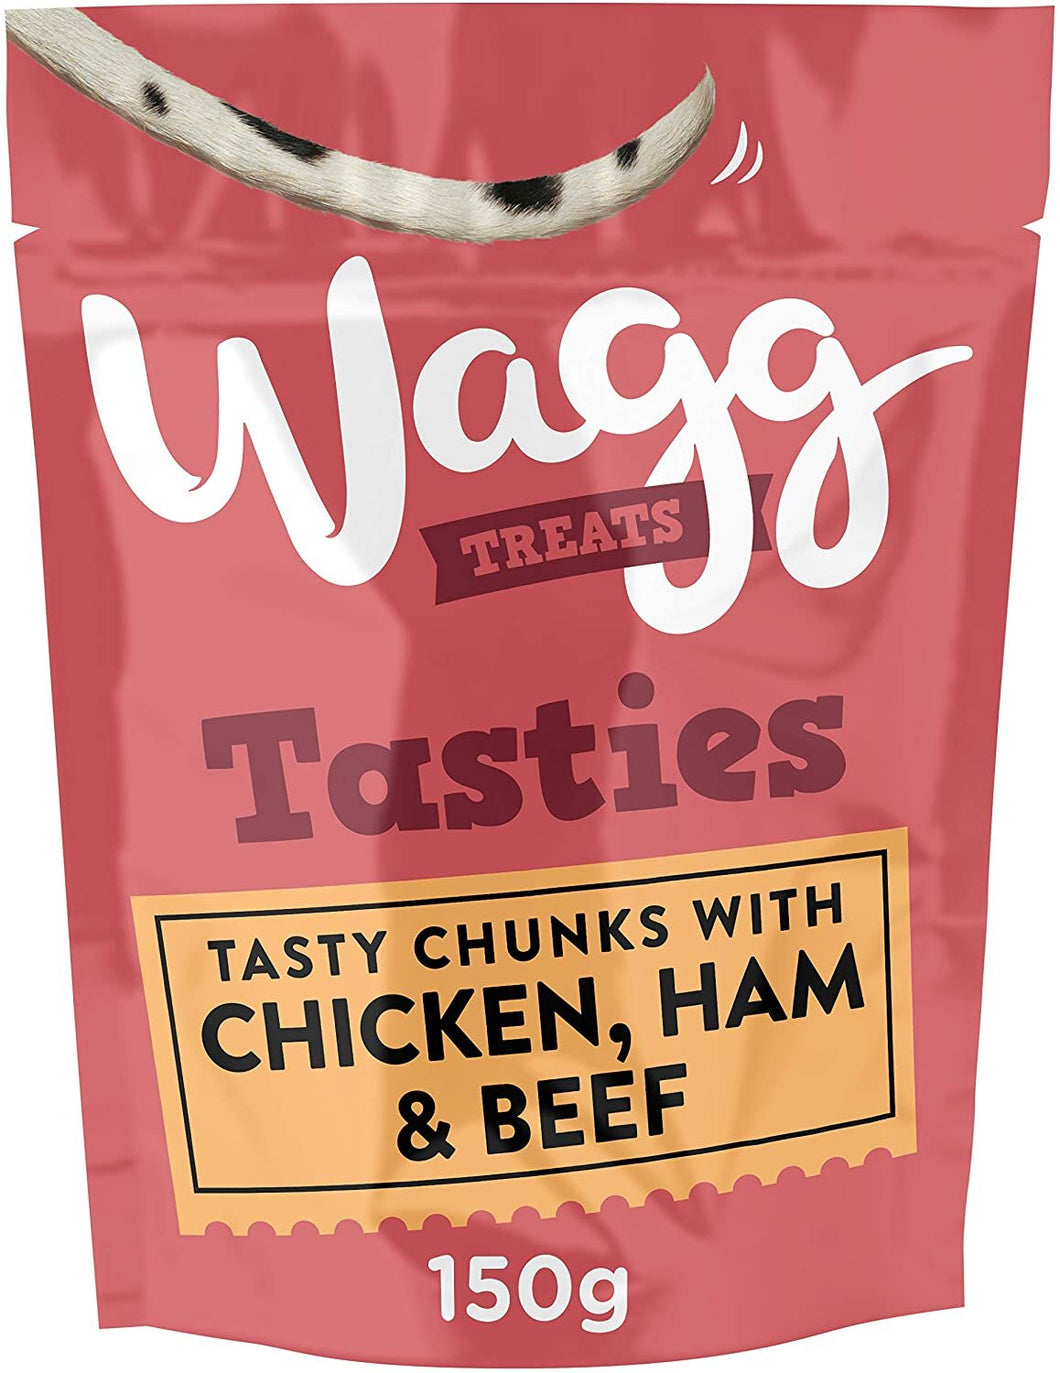 Wagg Tasties Chicken,Ham & Beef Treats 125g - Littlehampton Exotics 